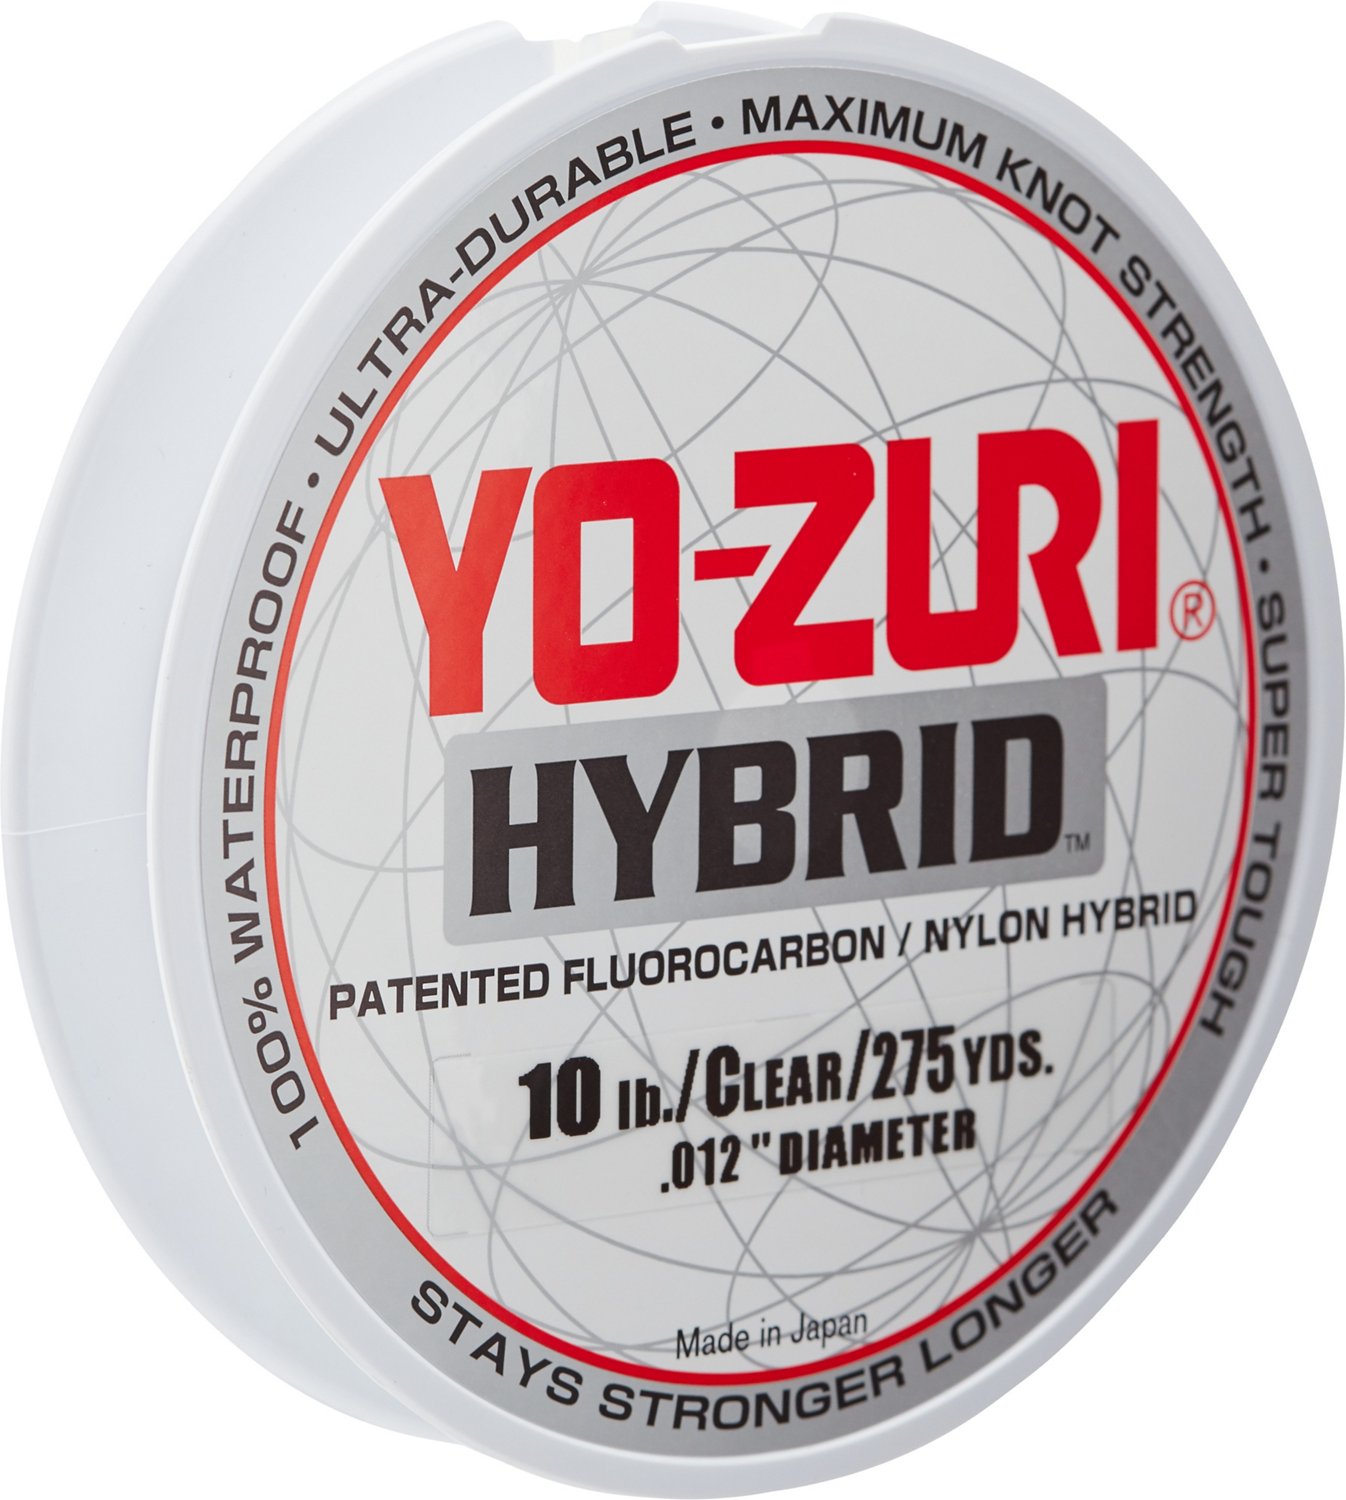 Yo-Zuri Hybrid 275 yds Fluorocarbon Fishing Line